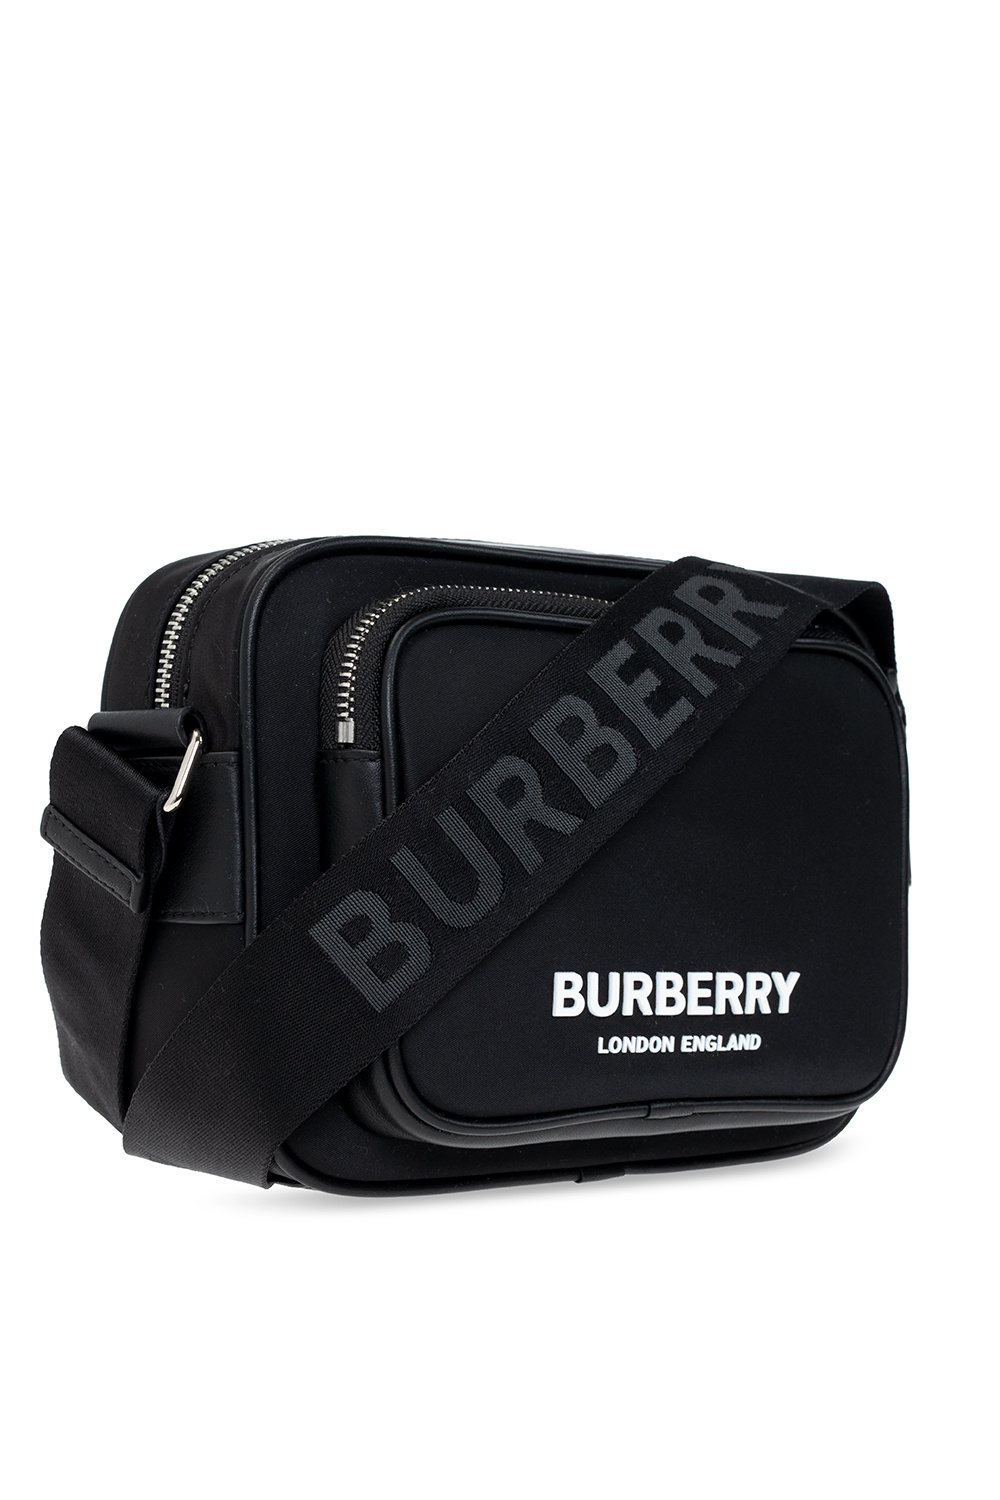 burberry Canvas ‘Paddy’ shoulder bag